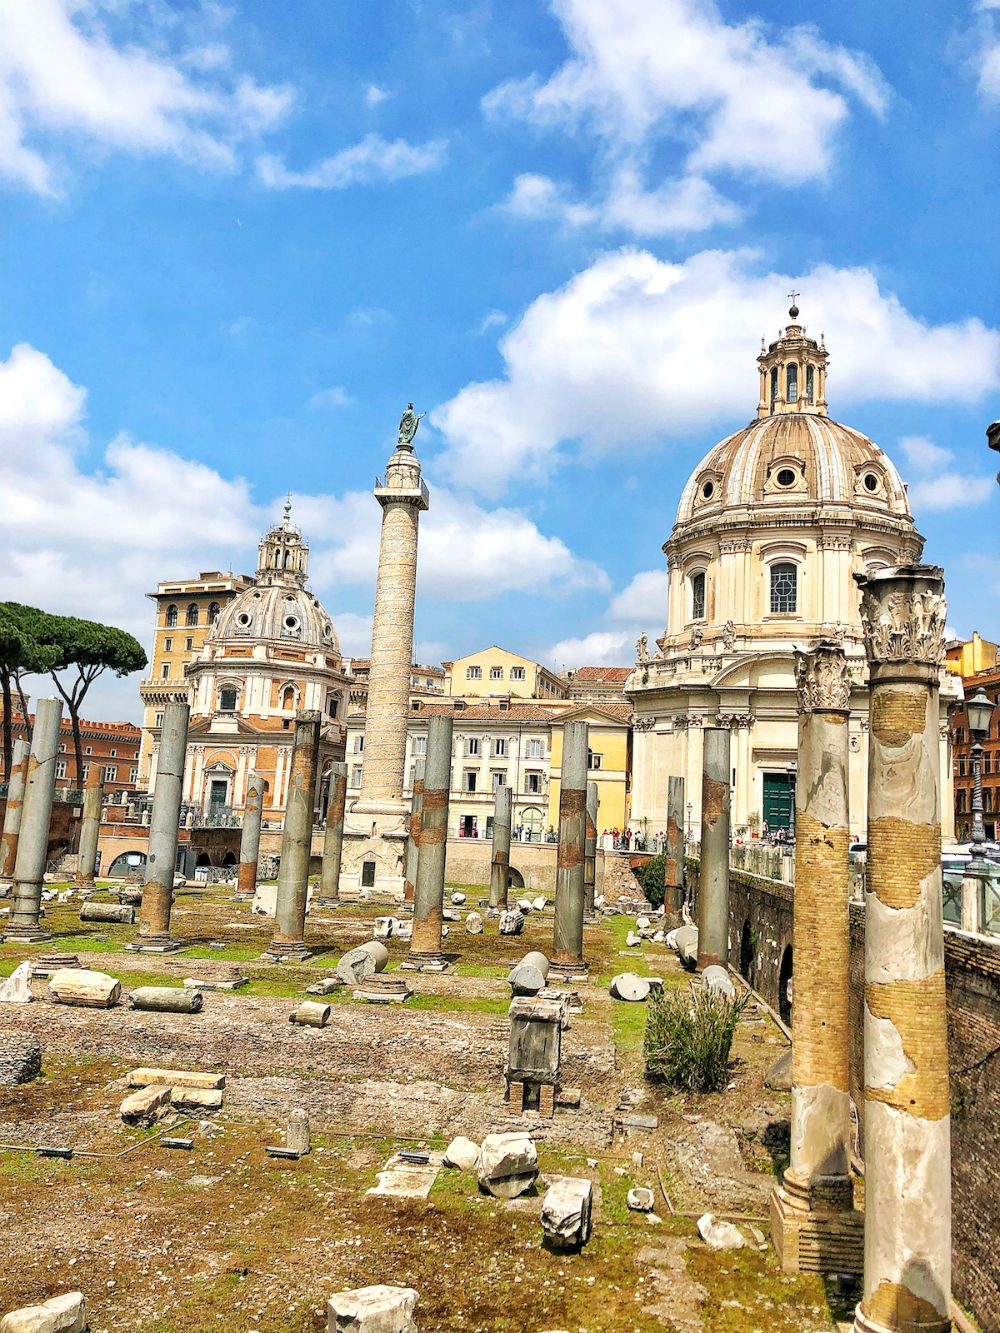 Columna lui Traian - Roma